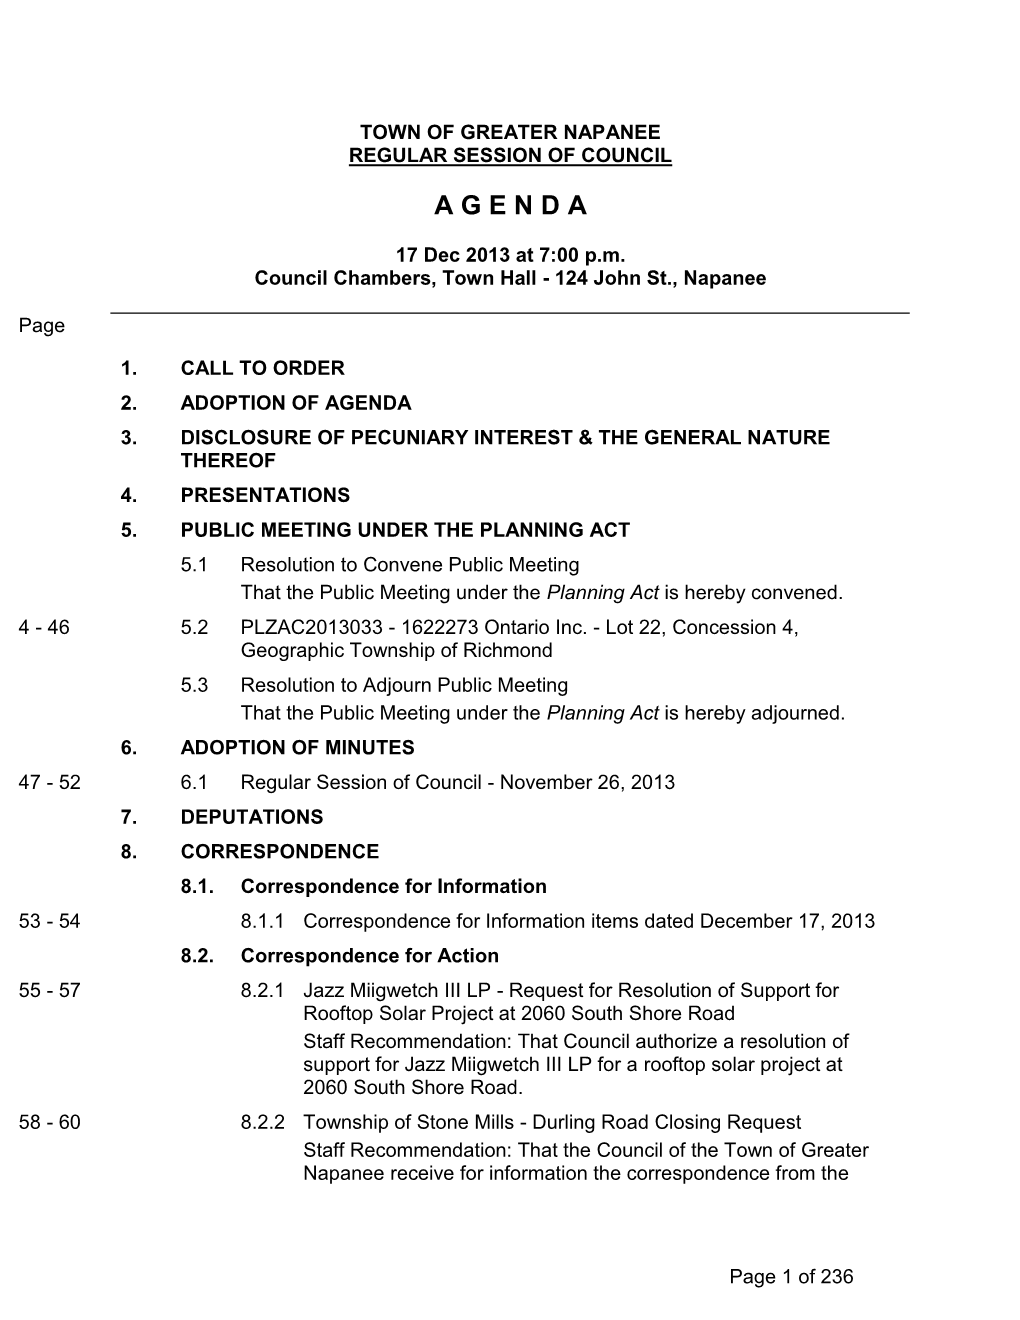 REGULAR SESSION COUNCIL - December 17, 2013 Agenda